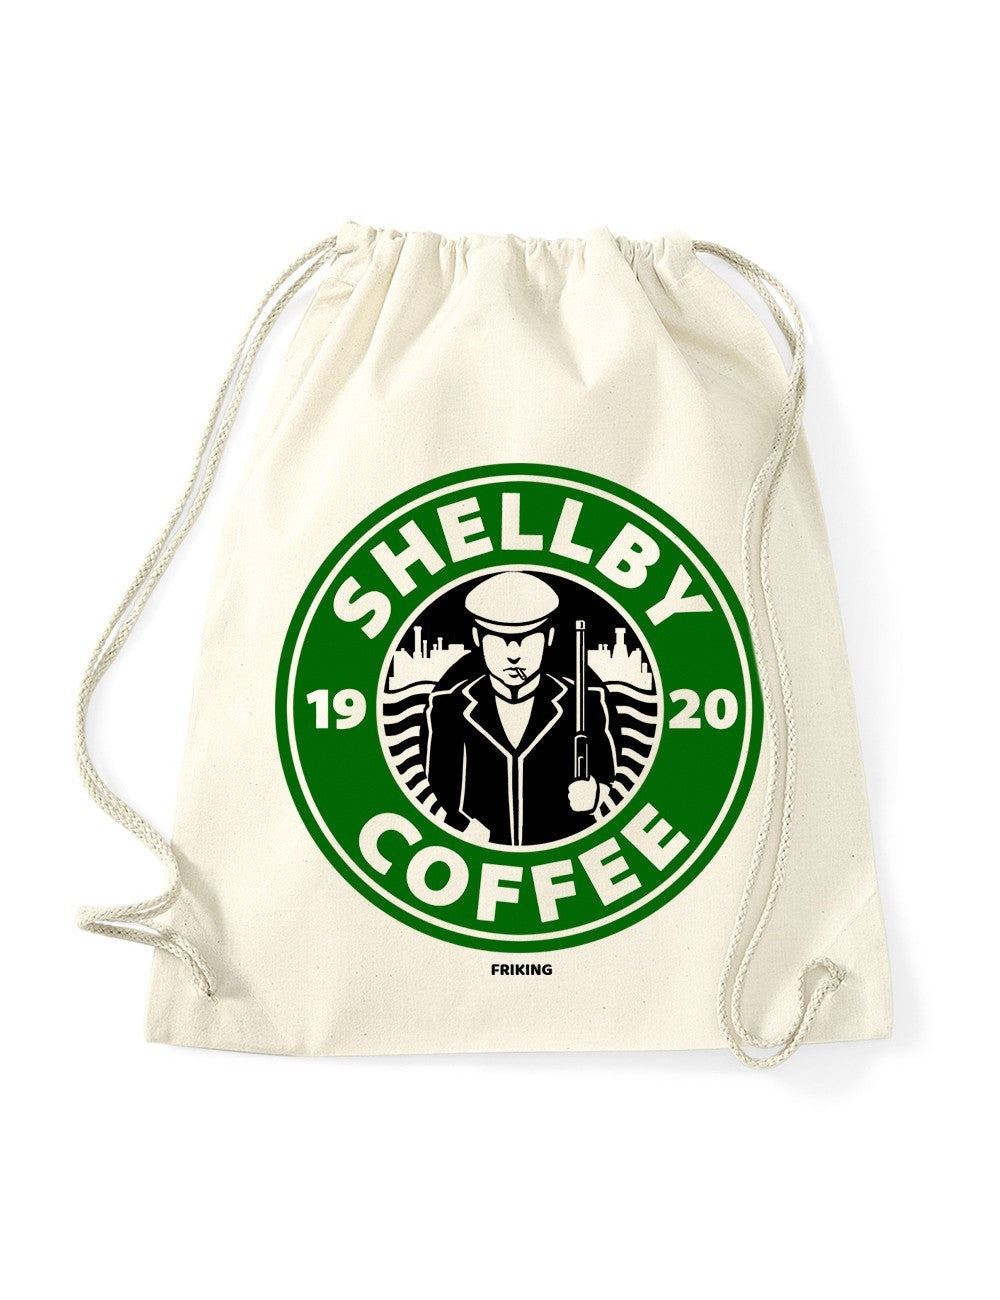  Shellby coffee 